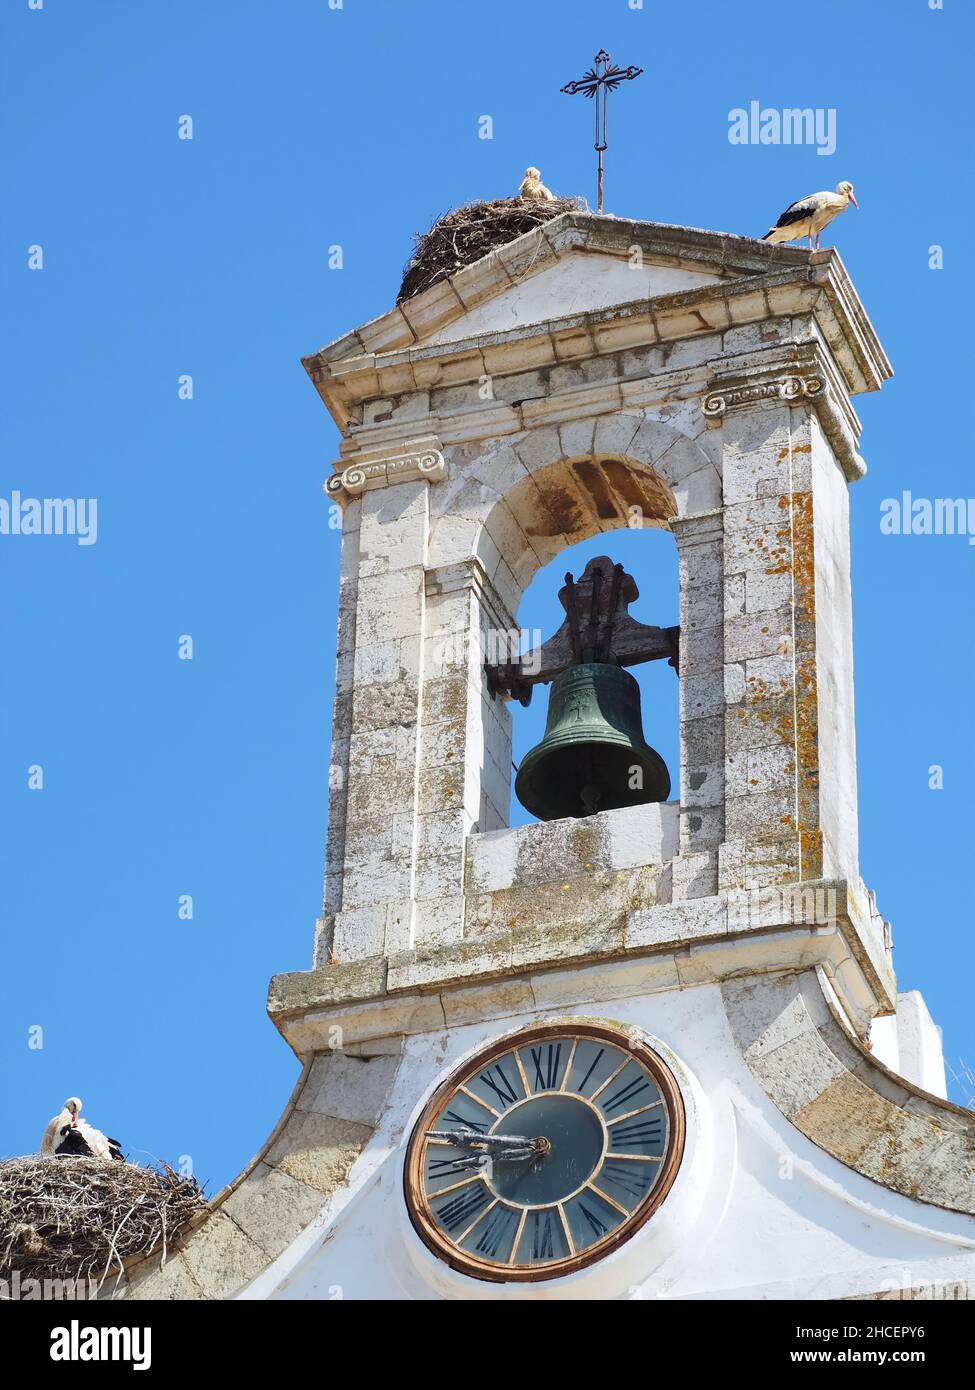 Building of arco da Vila, gate to old town of Faro at the Algarve coast of Portugal Stock Photo